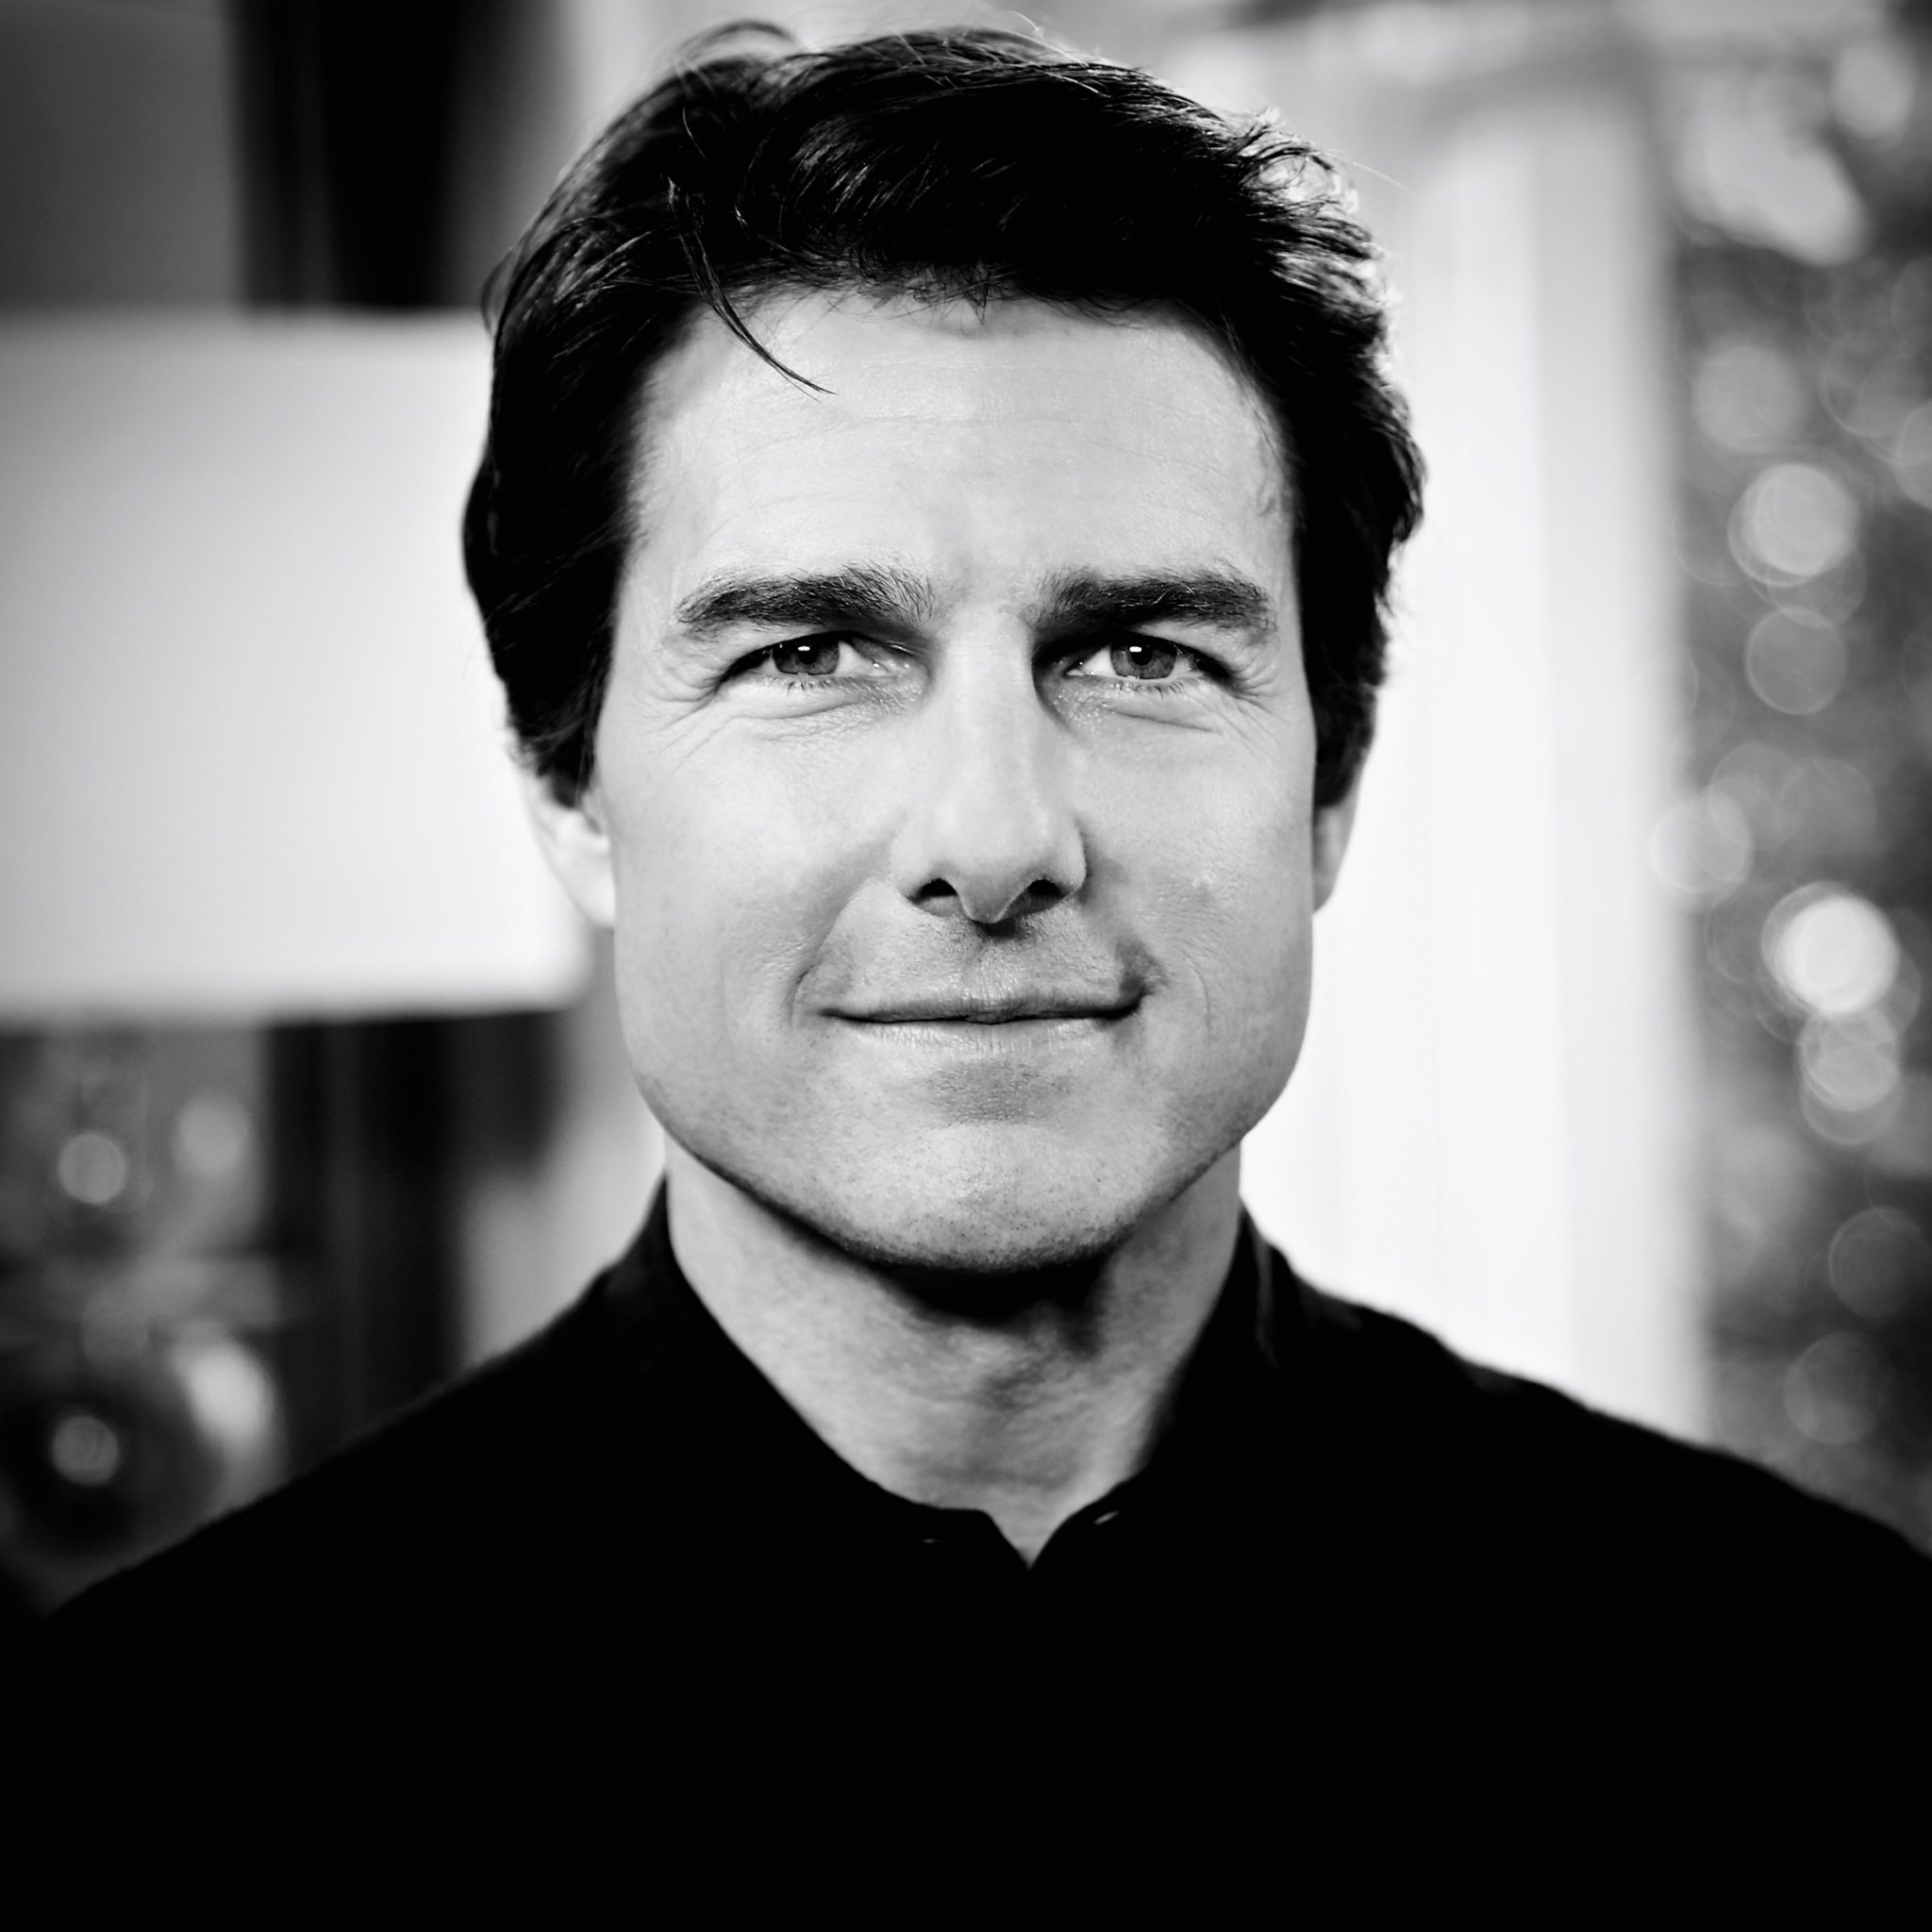 Tom Cruise Black & White Portrait Wallpaper for Google Nexus 9